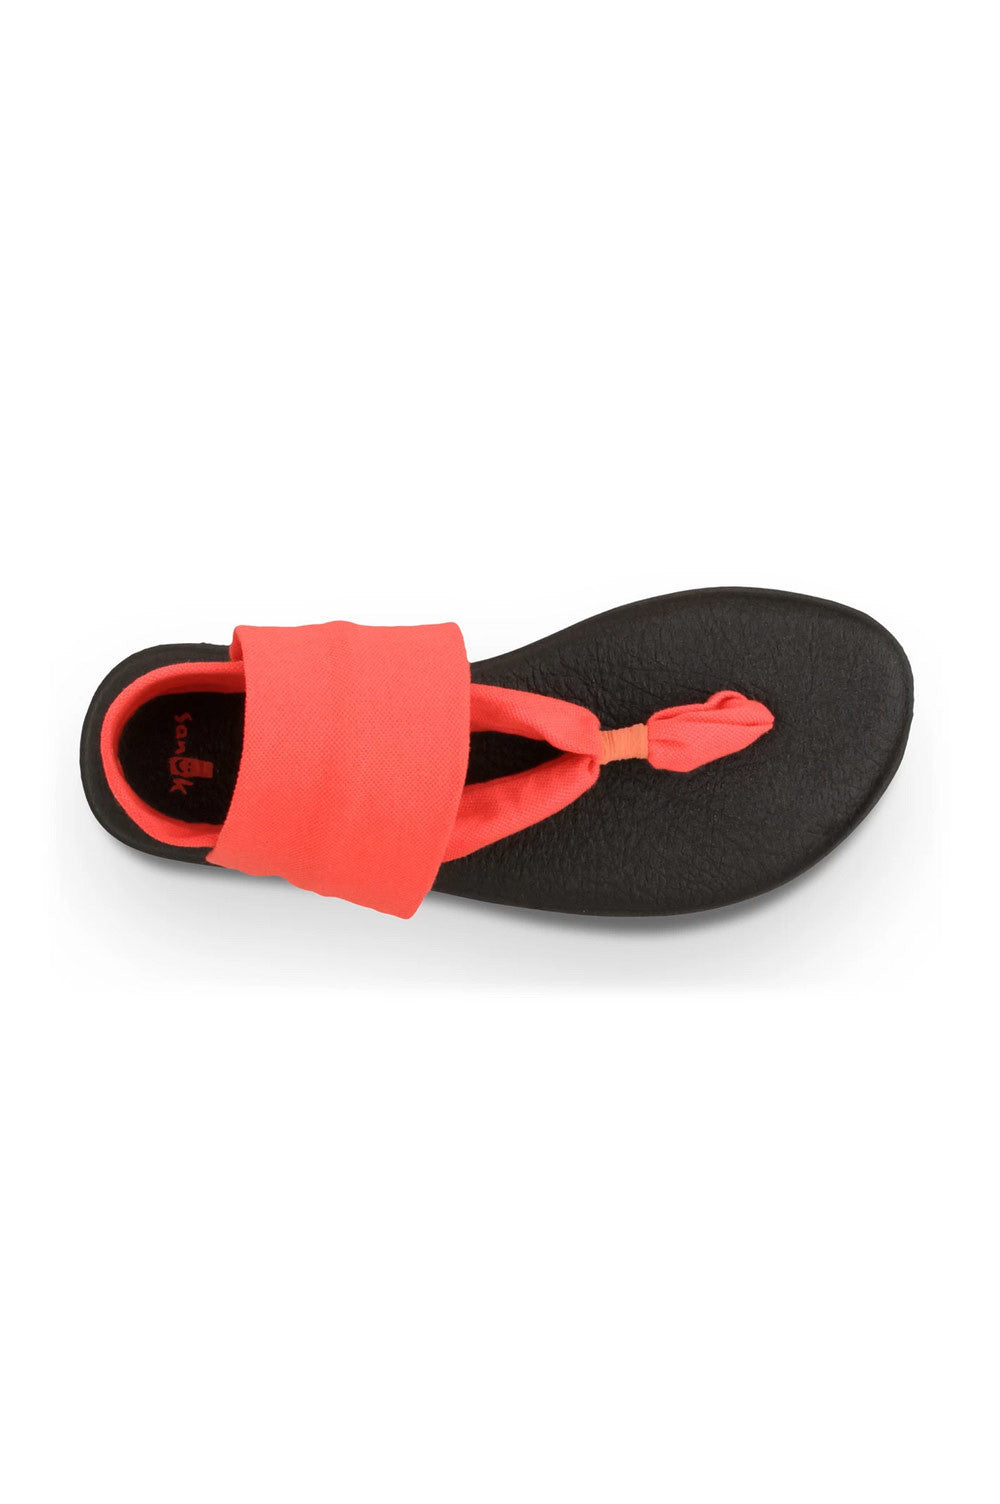 Sanuk Yoga Sling 2 Flip Flop Yoga Mat Footbed Sandals Women's Size